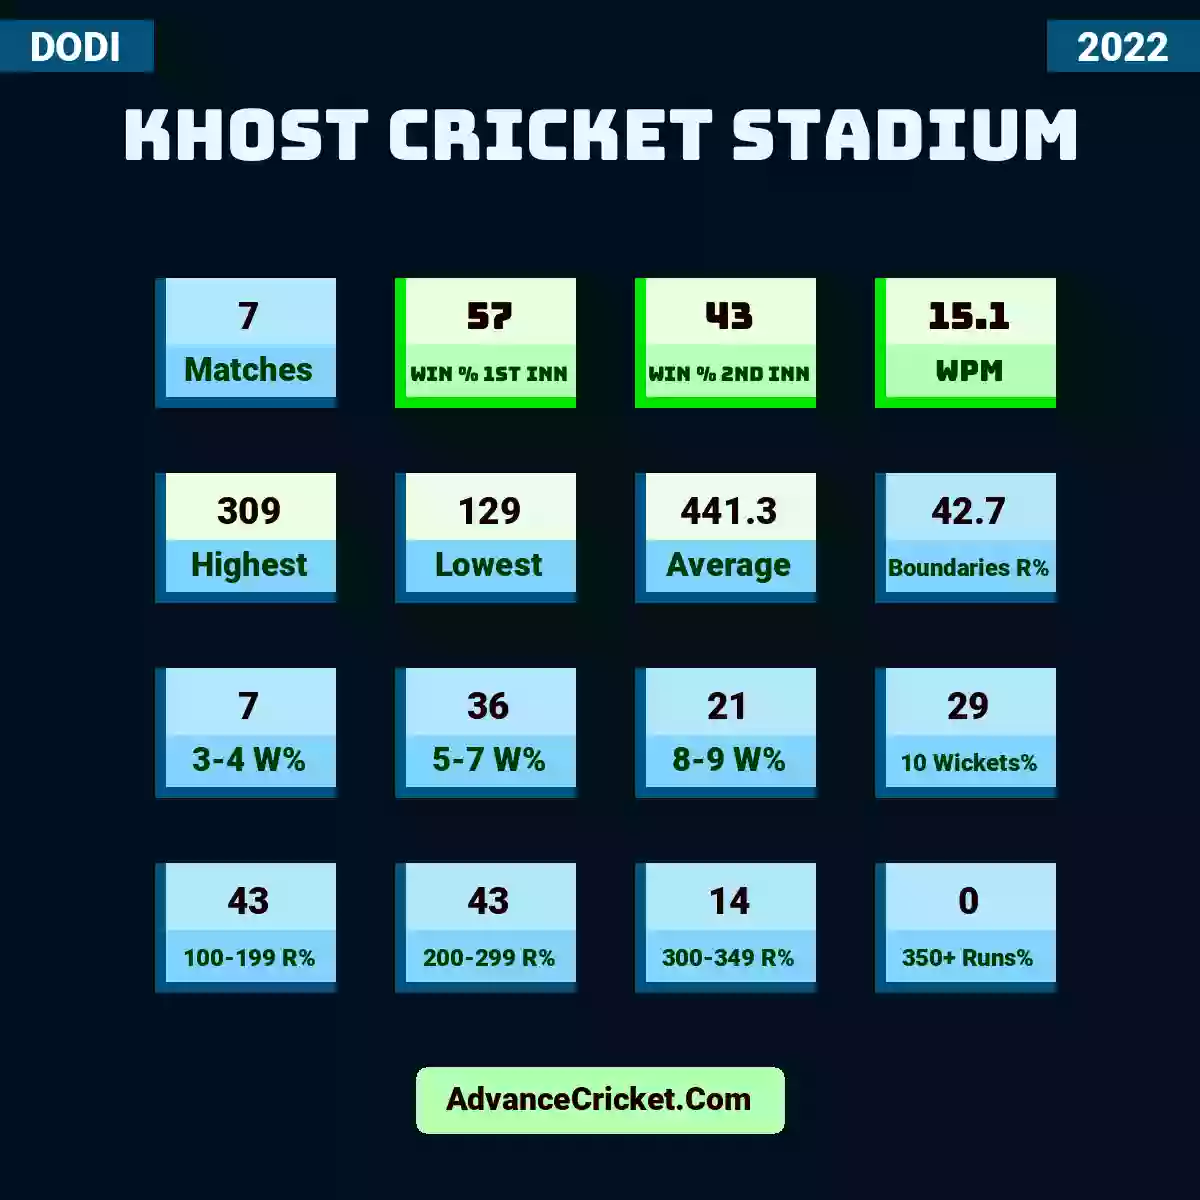 Image showing Khost Cricket Stadium with Matches: 7, Win % 1st Inn: 57, Win % 2nd Inn: 43, WPM: 15.1, Highest: 309, Lowest: 129, Average: 441.3, Boundaries R%: 42.7, 3-4 W%: 7, 5-7 W%: 36, 8-9 W%: 21, 10 Wickets%: 29, 100-199 R%: 43, 200-299 R%: 43, 300-349 R%: 14, 350+ Runs%: 0.